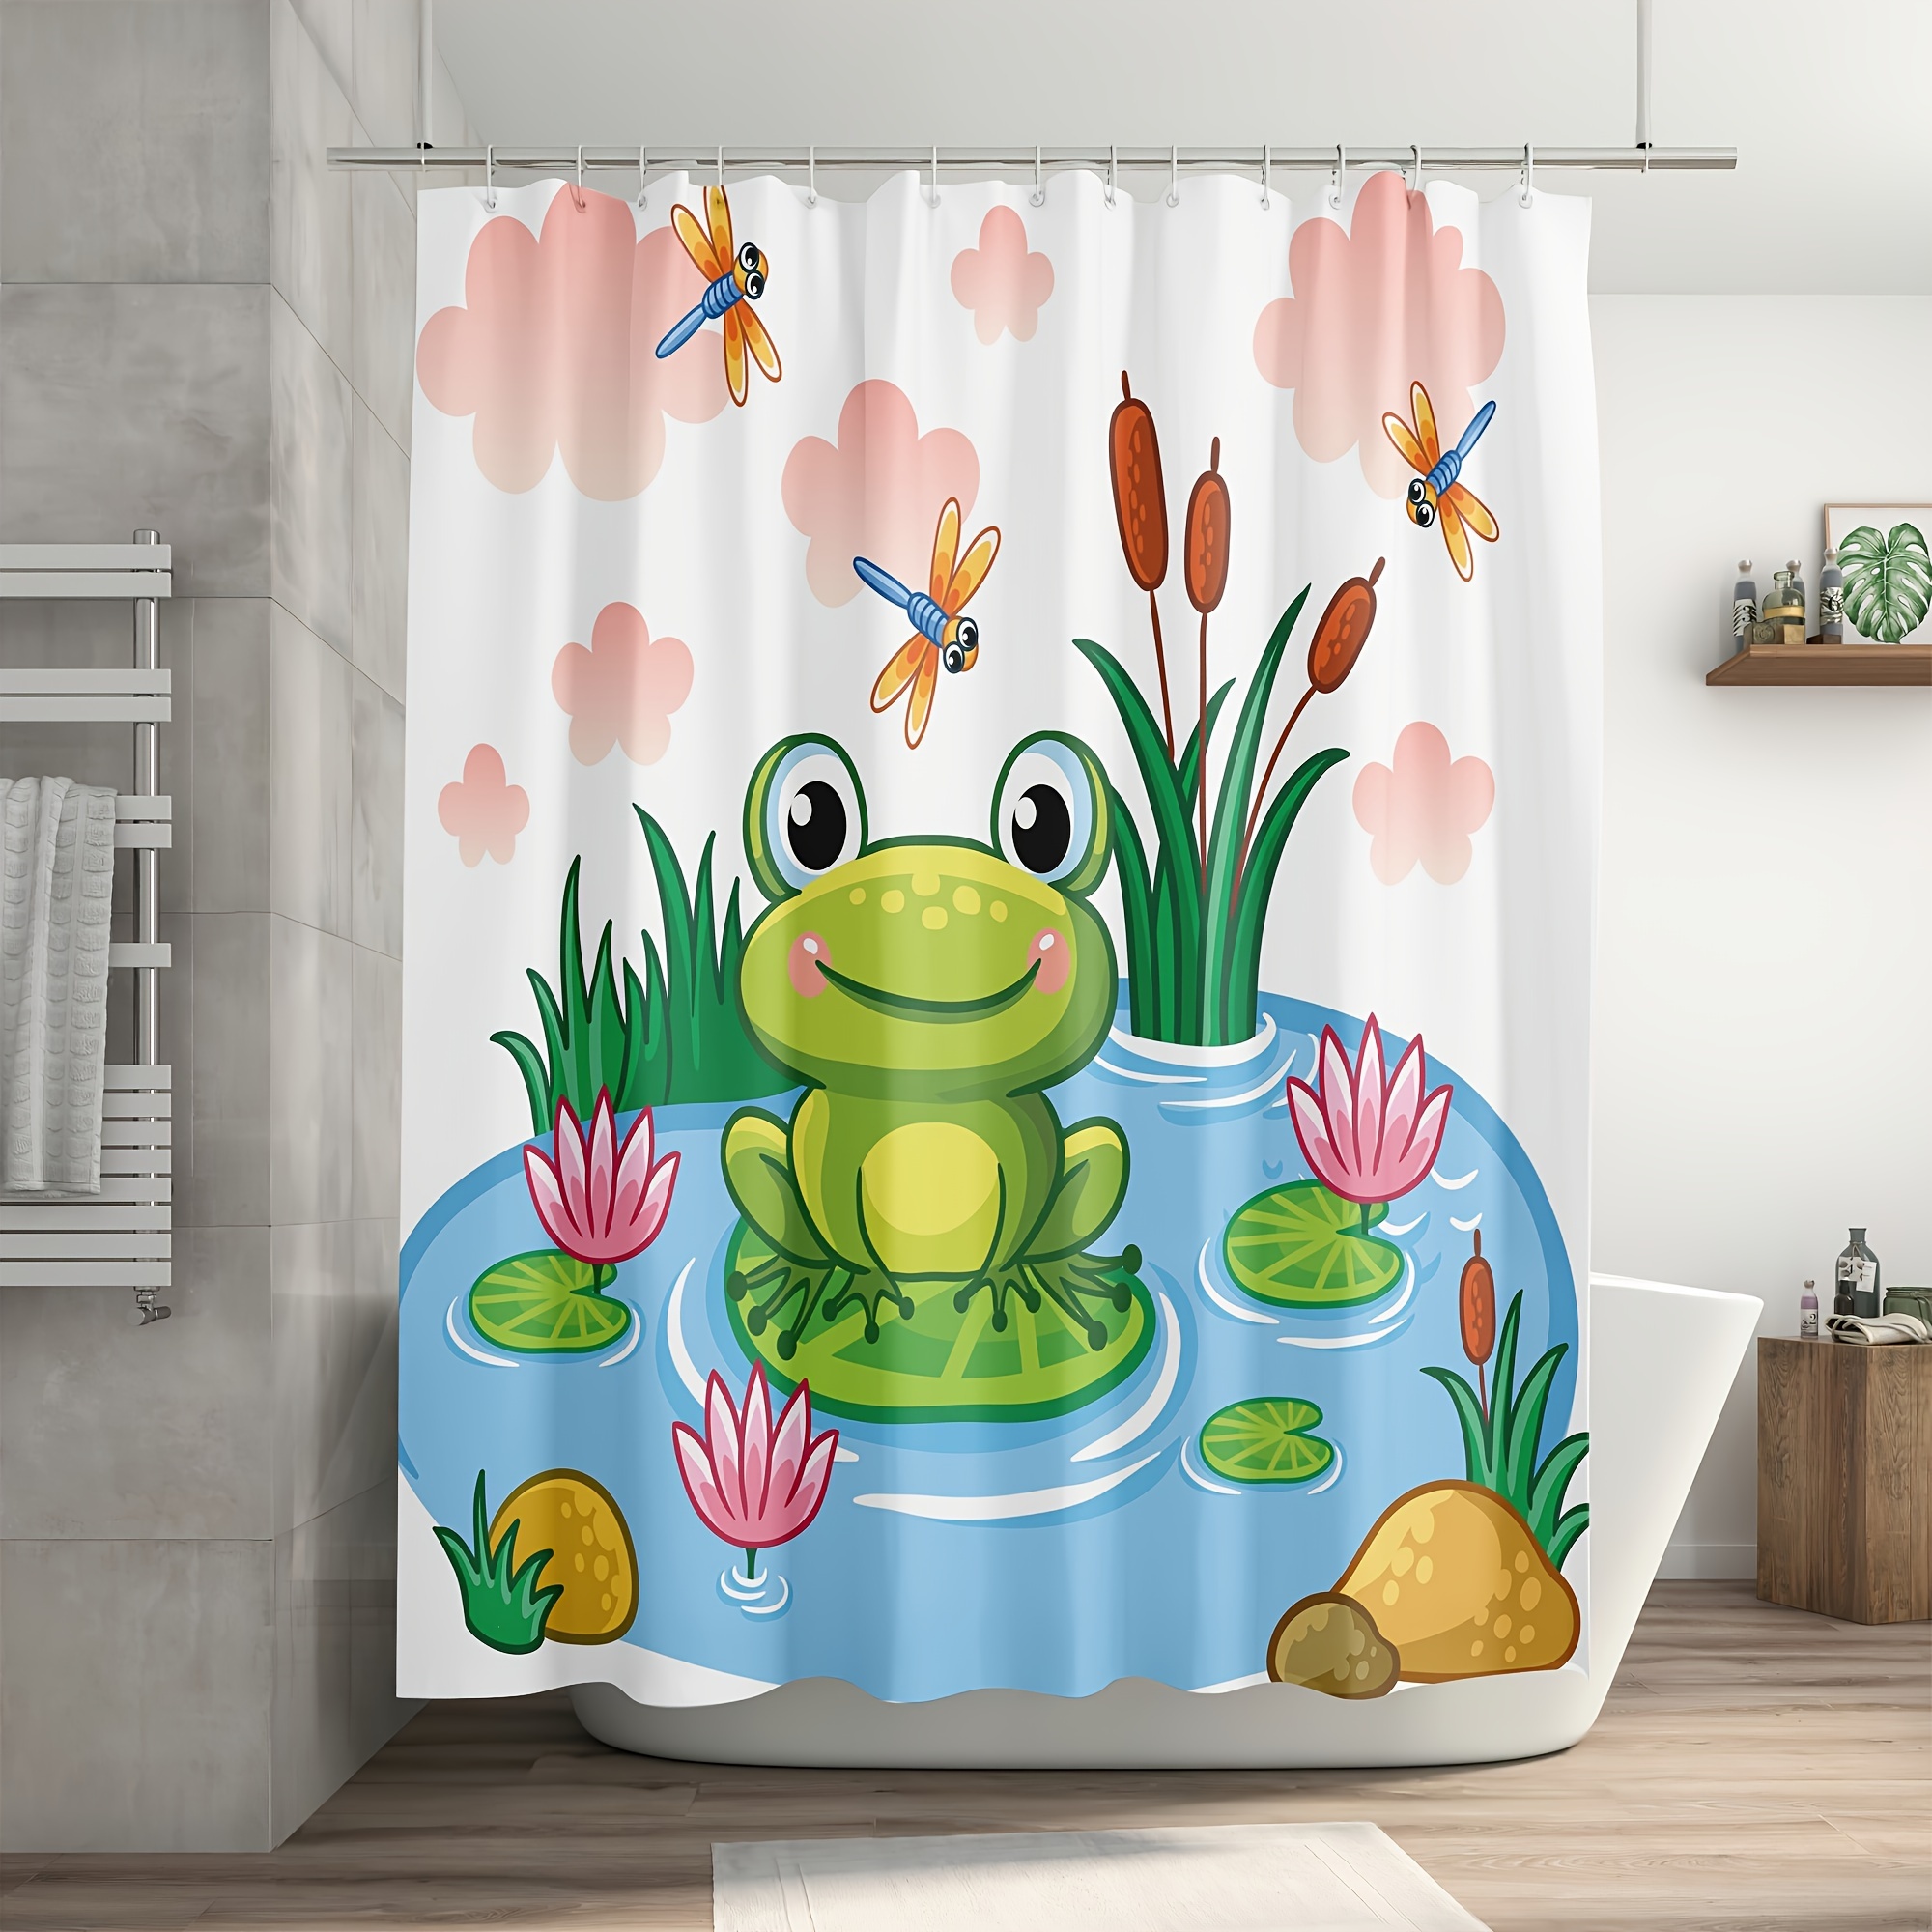 Cute Green Frog King Fabric Shower Curtain Sets Bathroom Decor